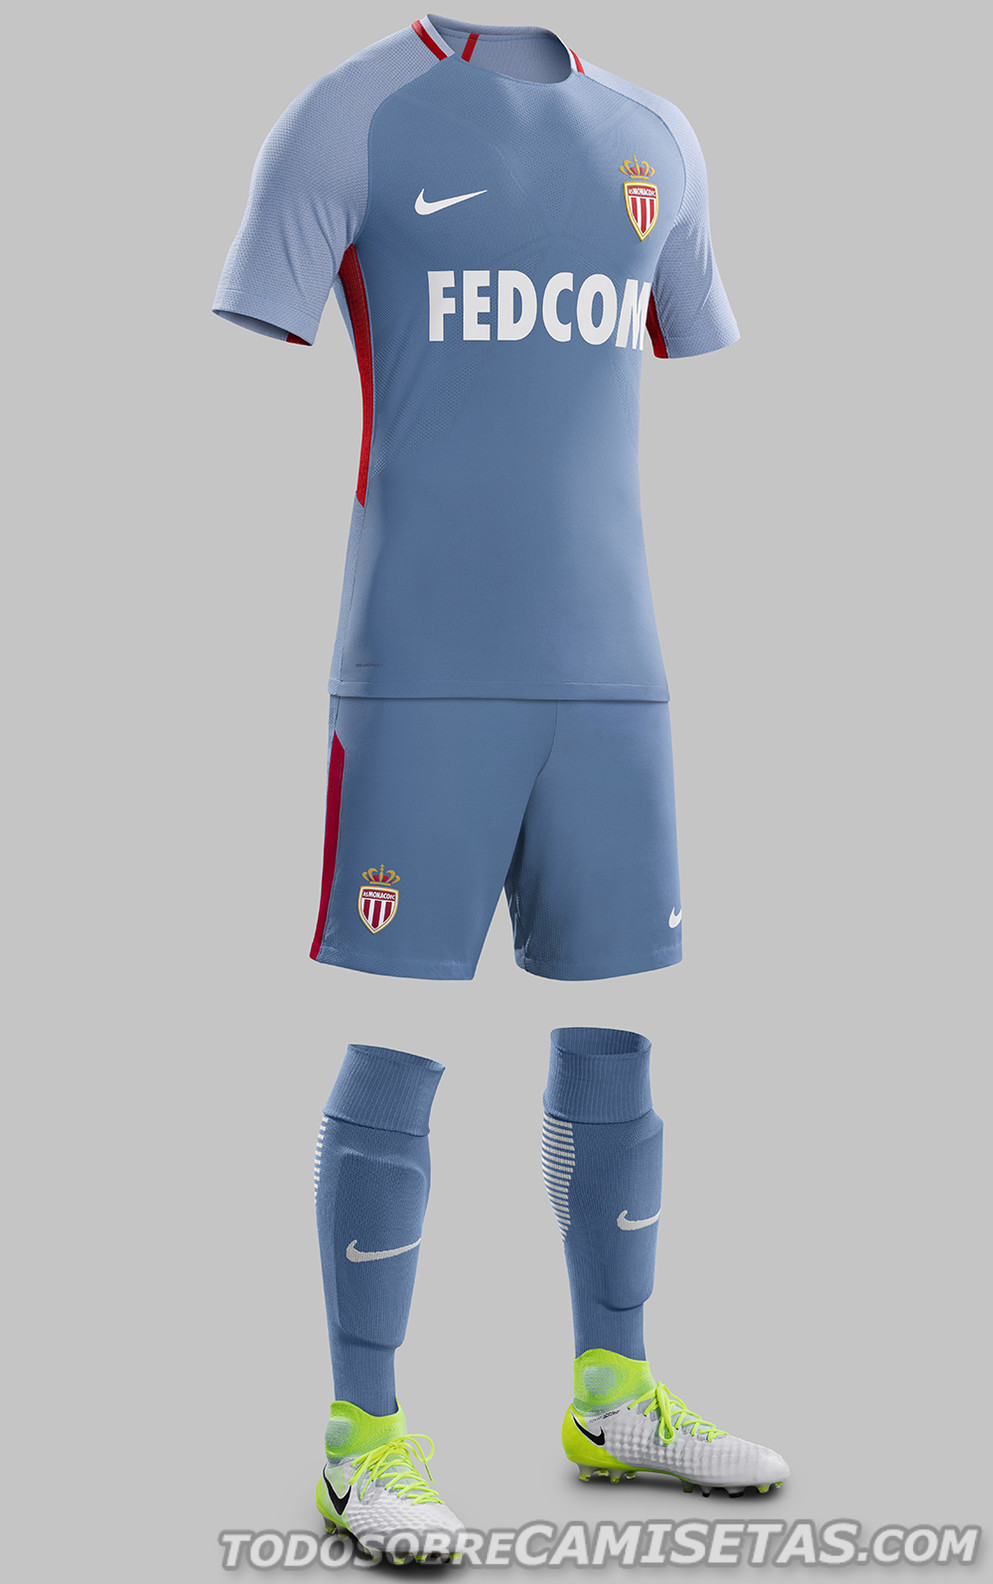 AS Monaco 2017-18 Nike away kit